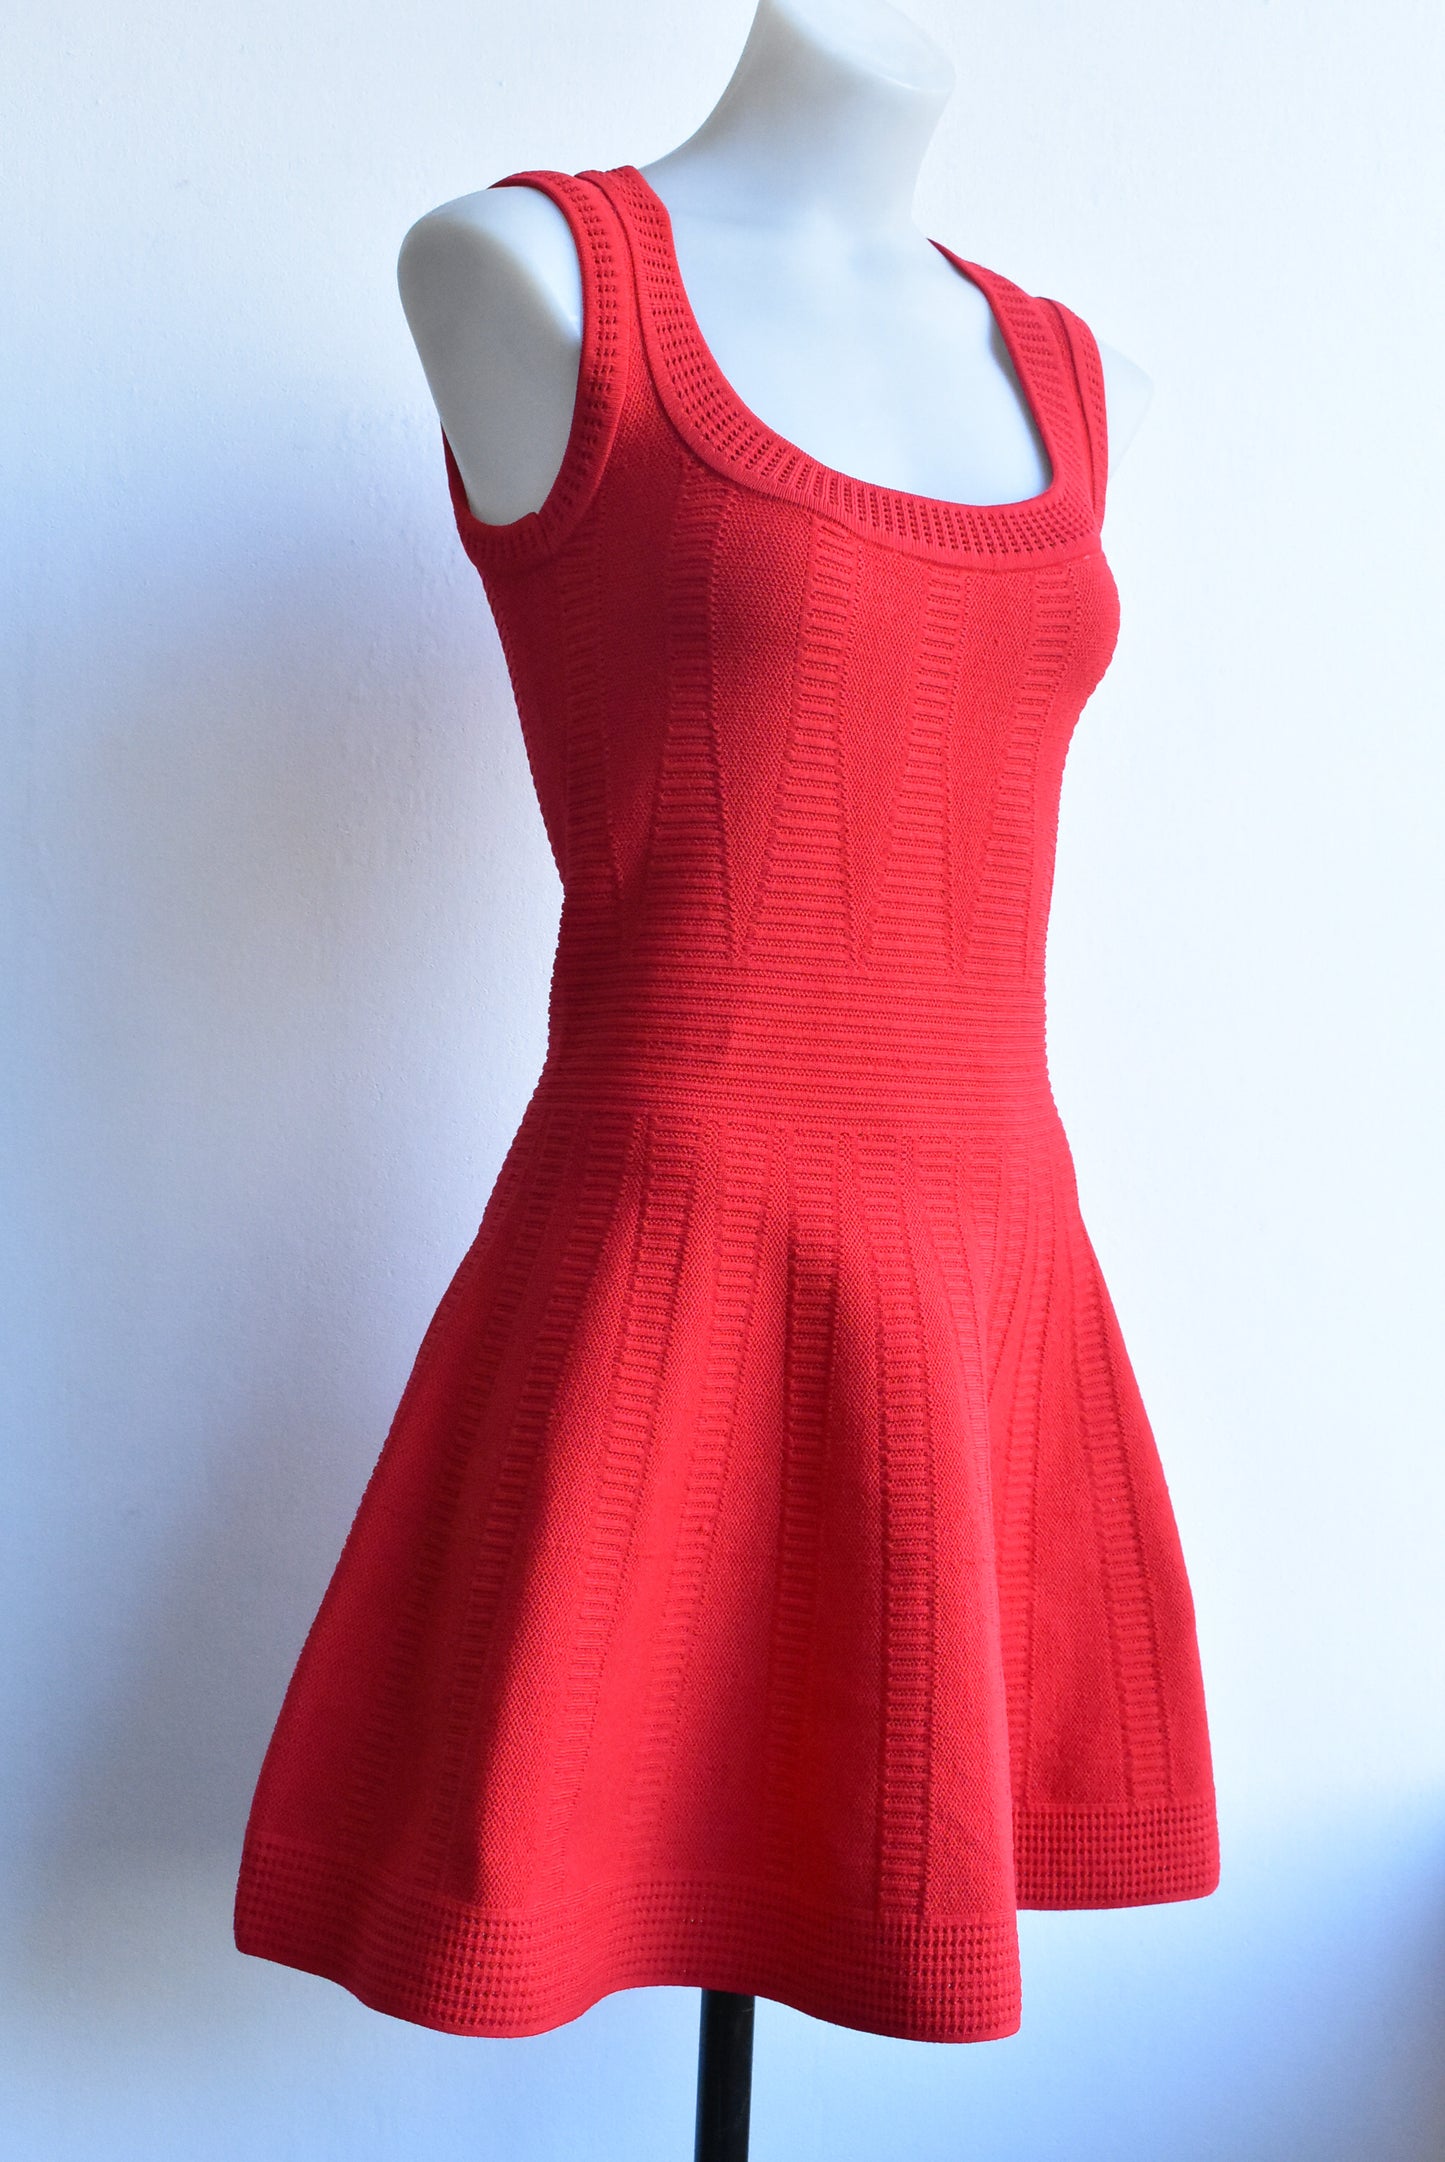 Stretchy red knit dress, size S